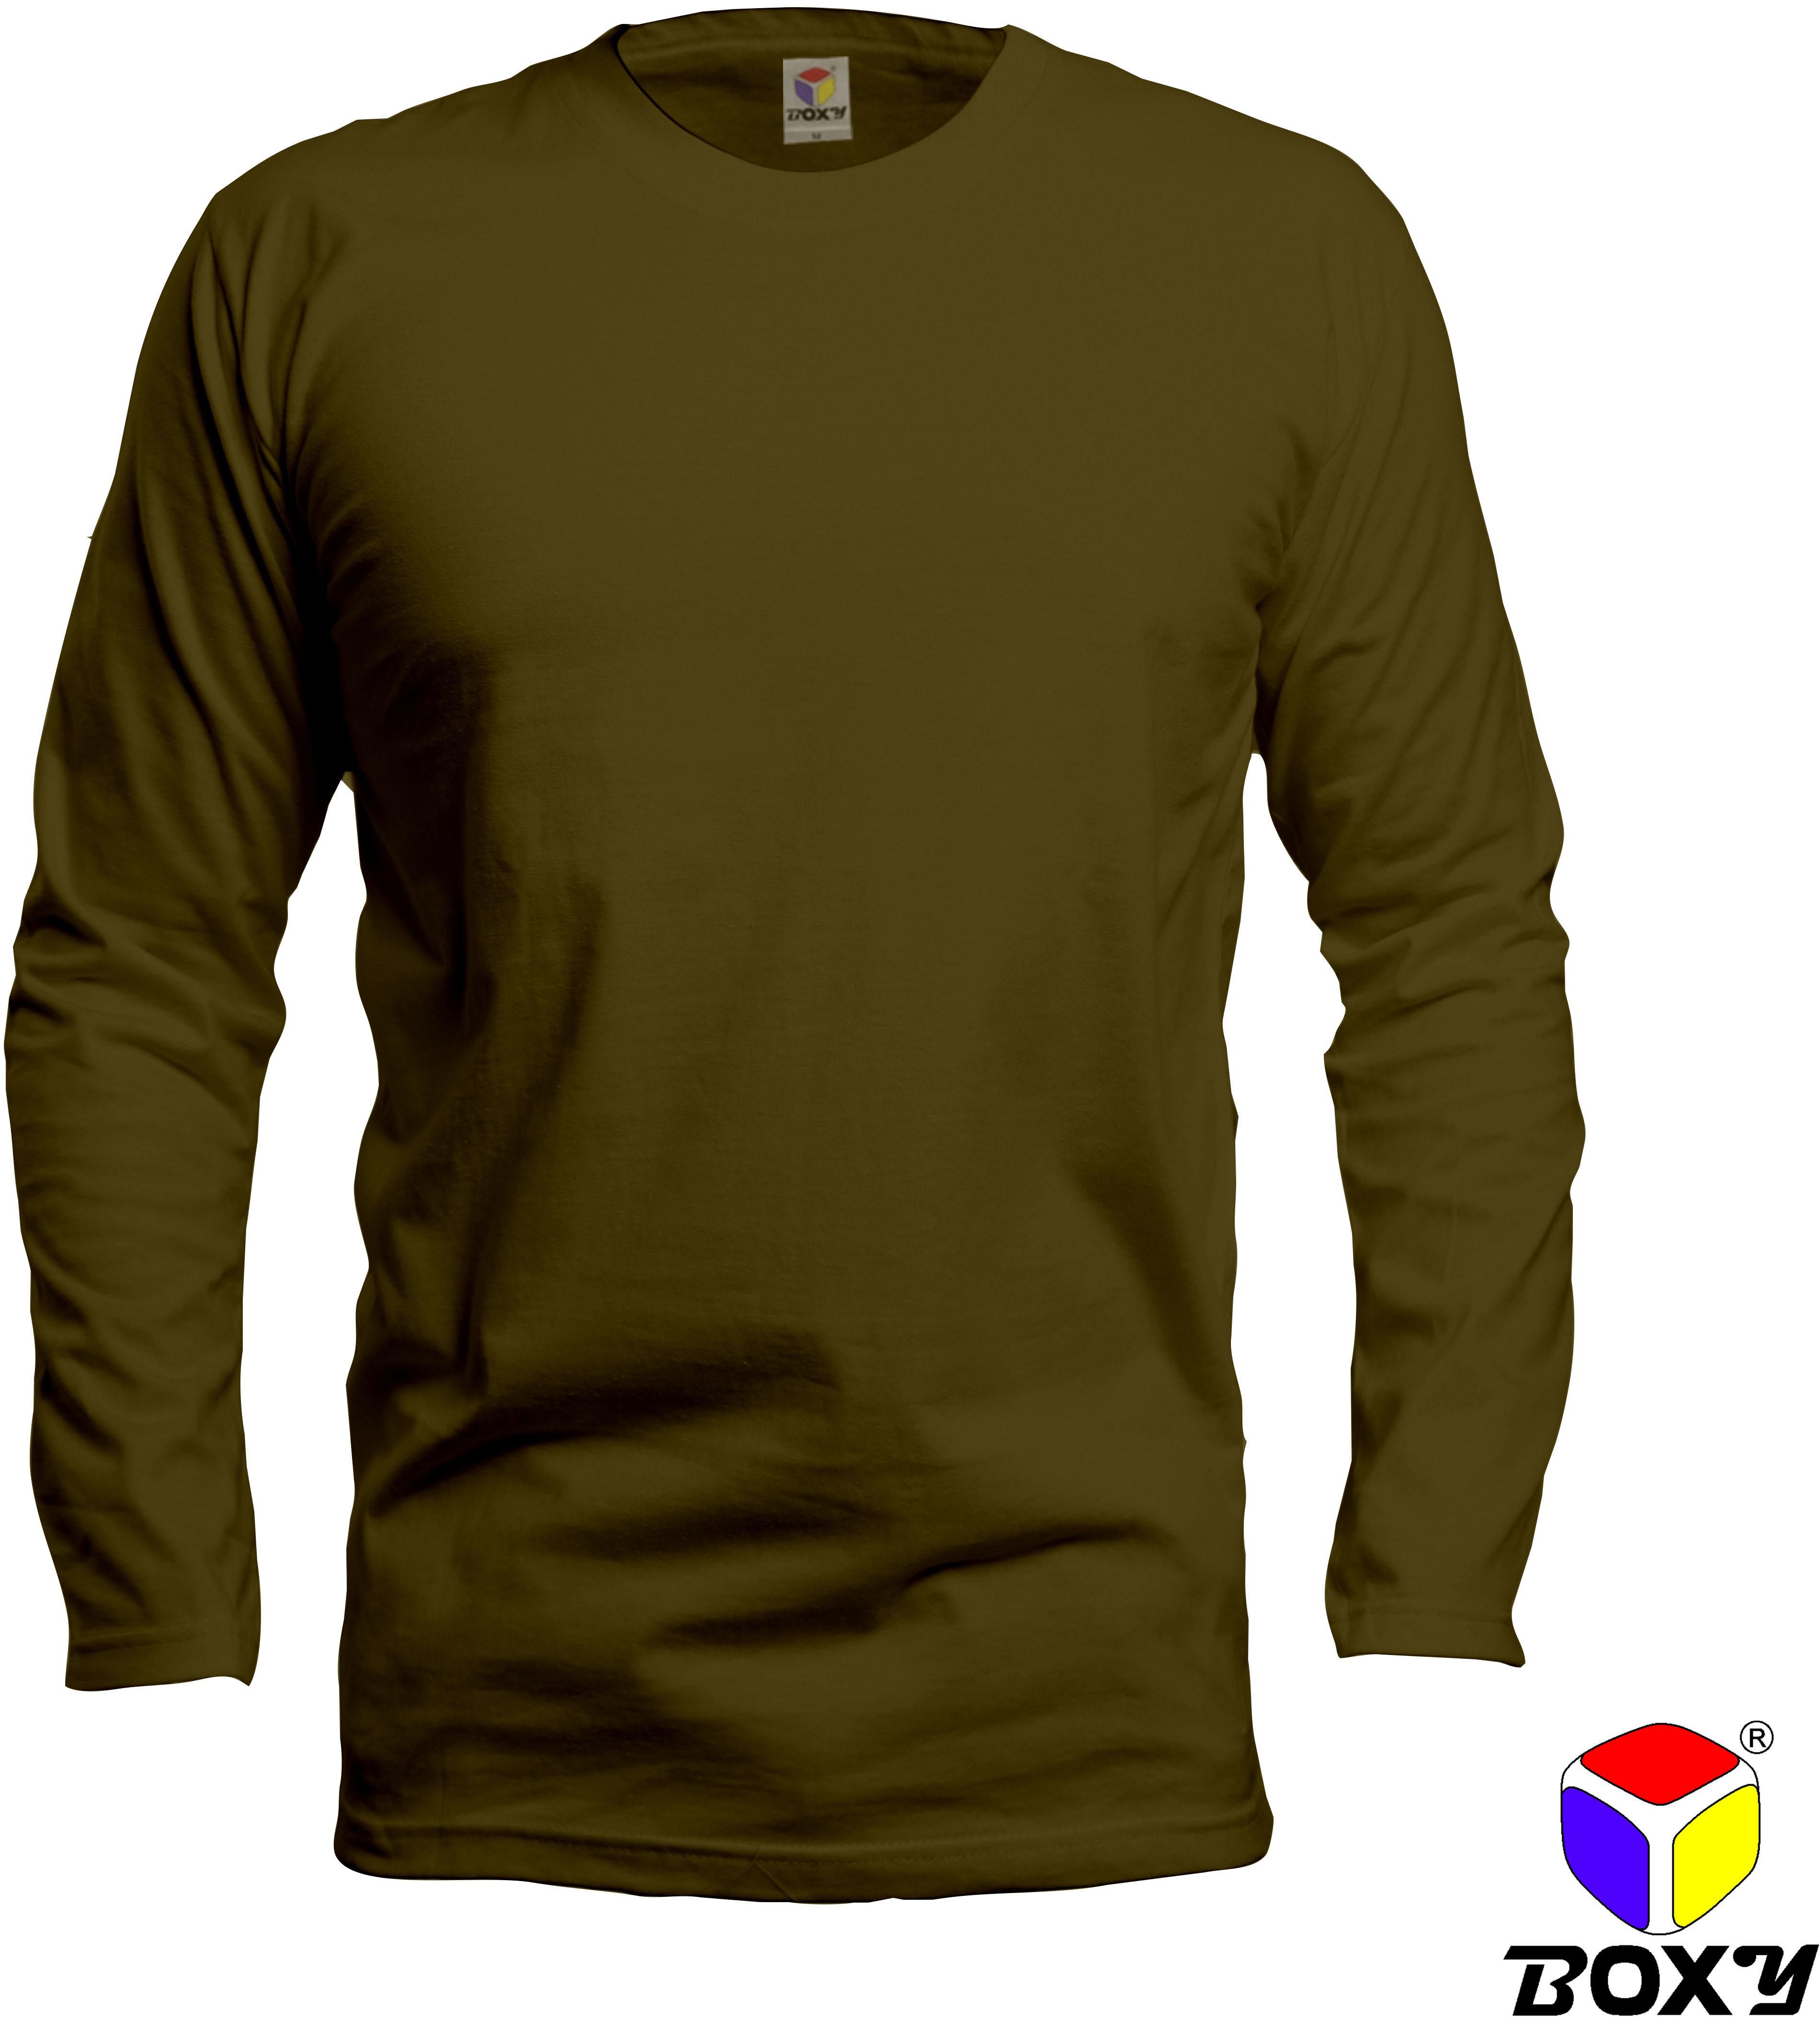 BOXY Microfiber Round Neck Long Sleeves Plain T-shirt (Dark Brown)